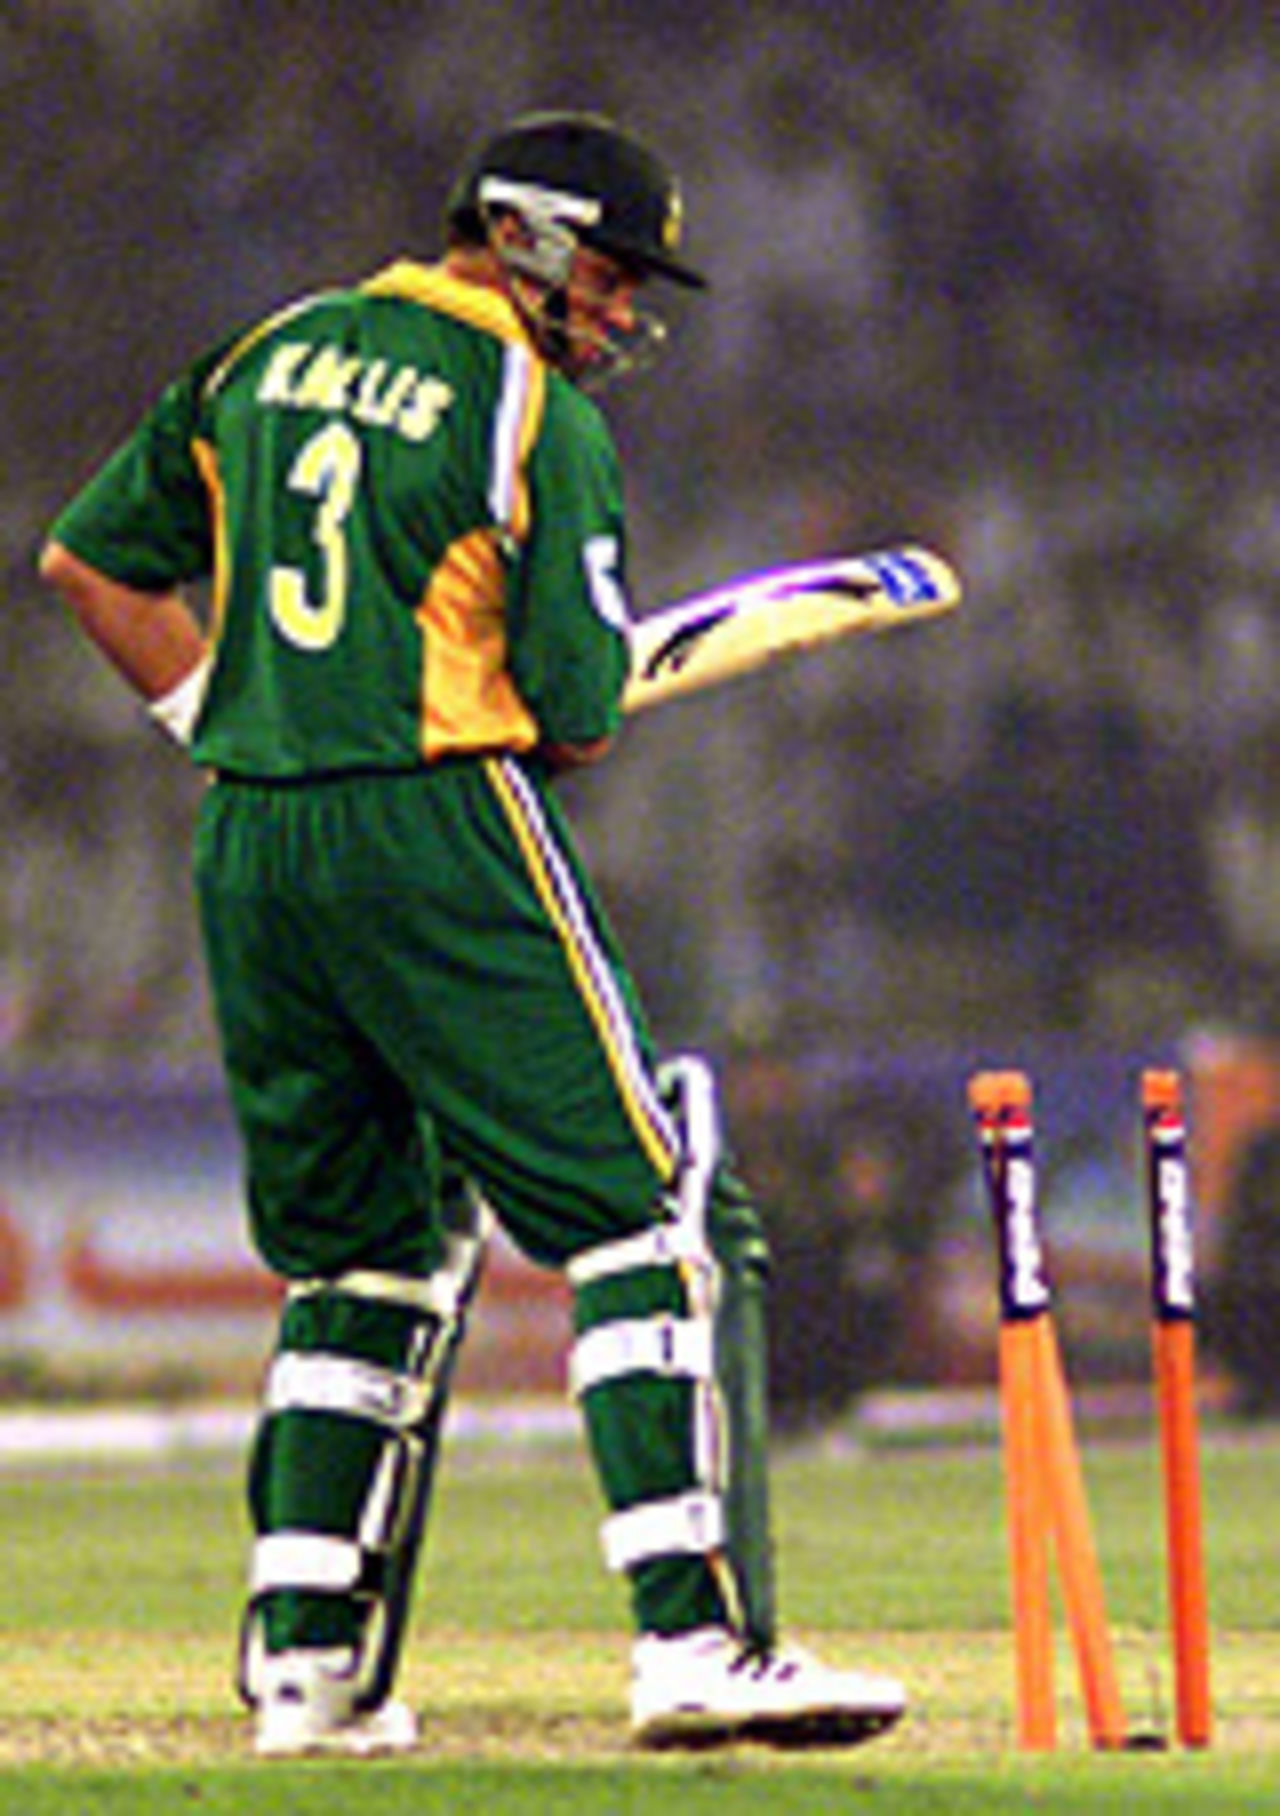 Jacques Kallis looks back at his stumps, Lahore, Ist ODI, Pakistan v South Africa, 3 October 2003